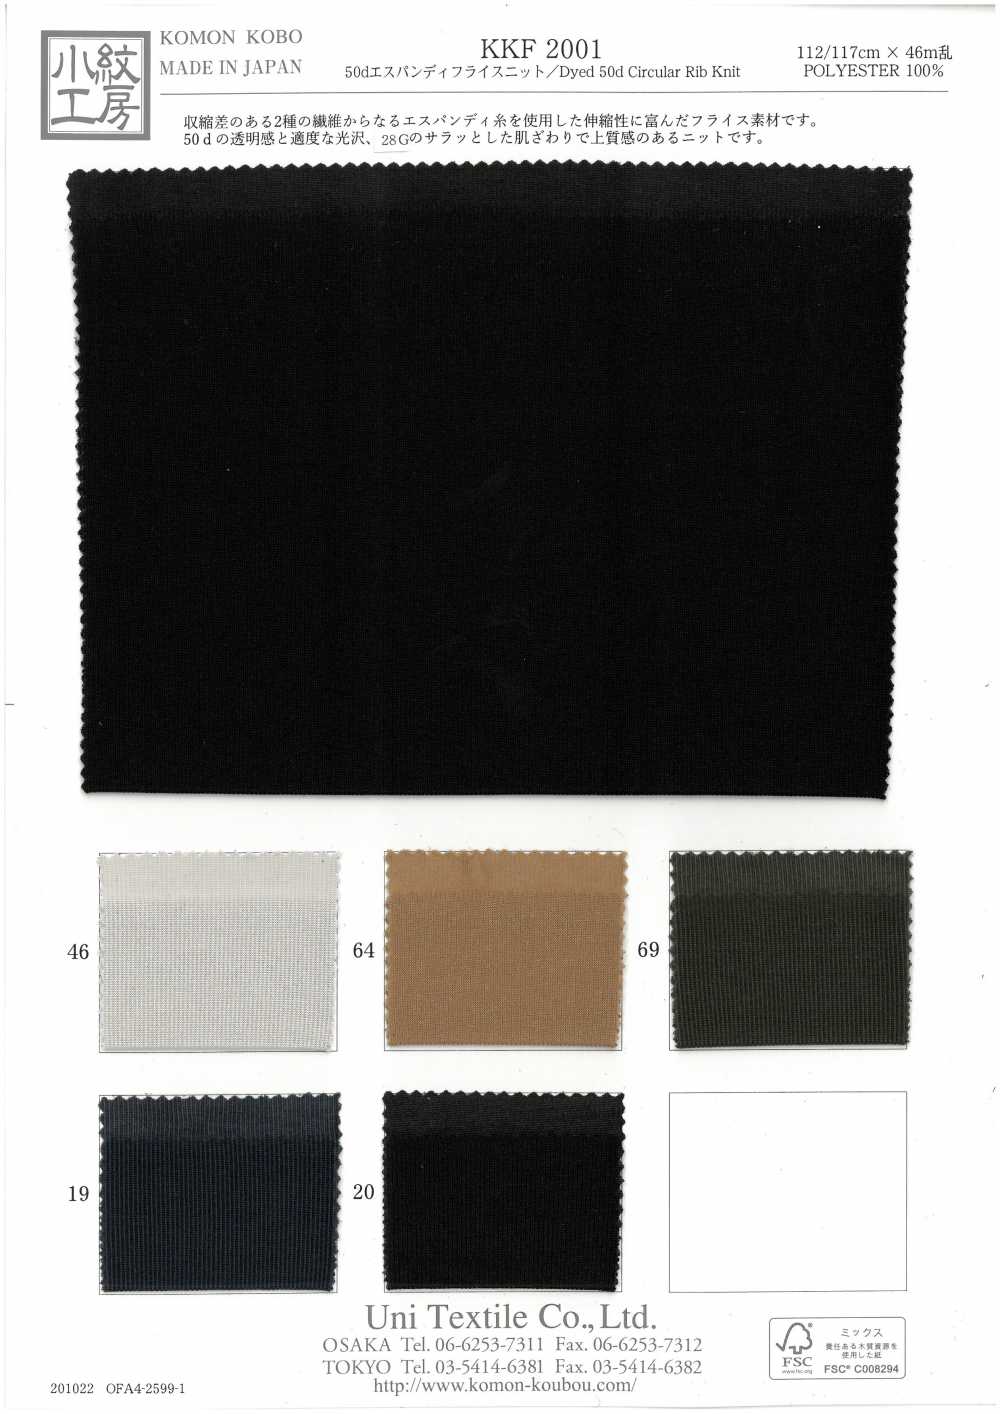 KKF2001 50d Espandy Circular Rib Knit[Textile / Fabric] Uni Textile